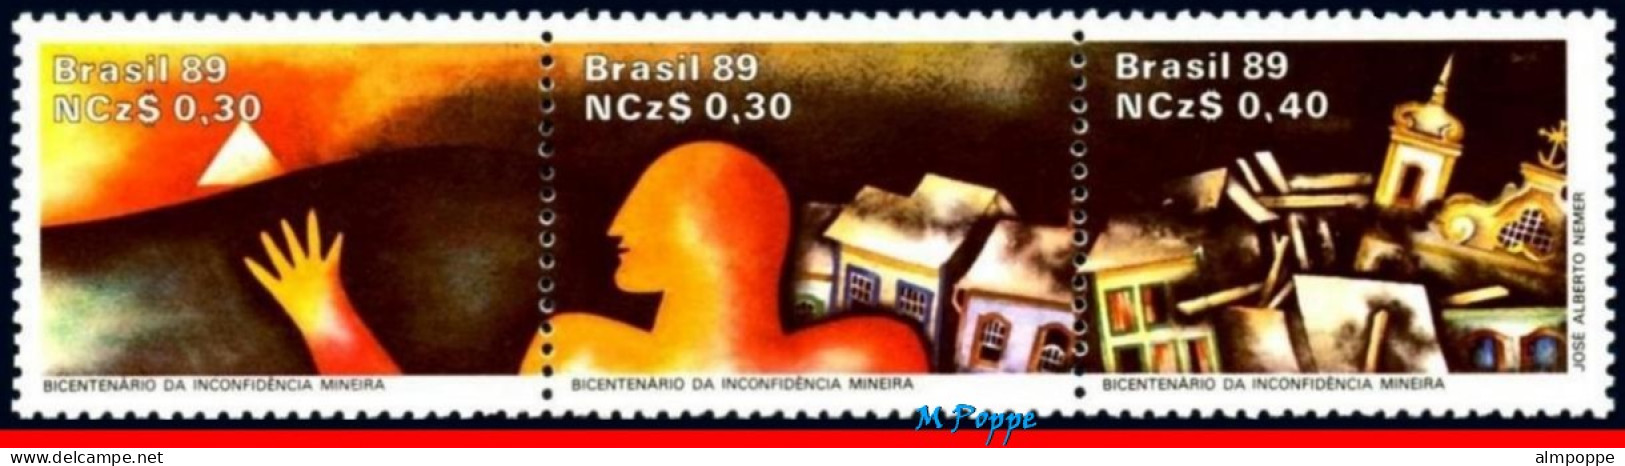 Ref. BR-2166-FO BRAZIL 1989 - INDEPENDENCE MOVEMENT,CONSPIRACY, MINAS, MI# 2295-97,SHEET MNH, HISTORY 30V Sc# 2166 - Blocchi & Foglietti